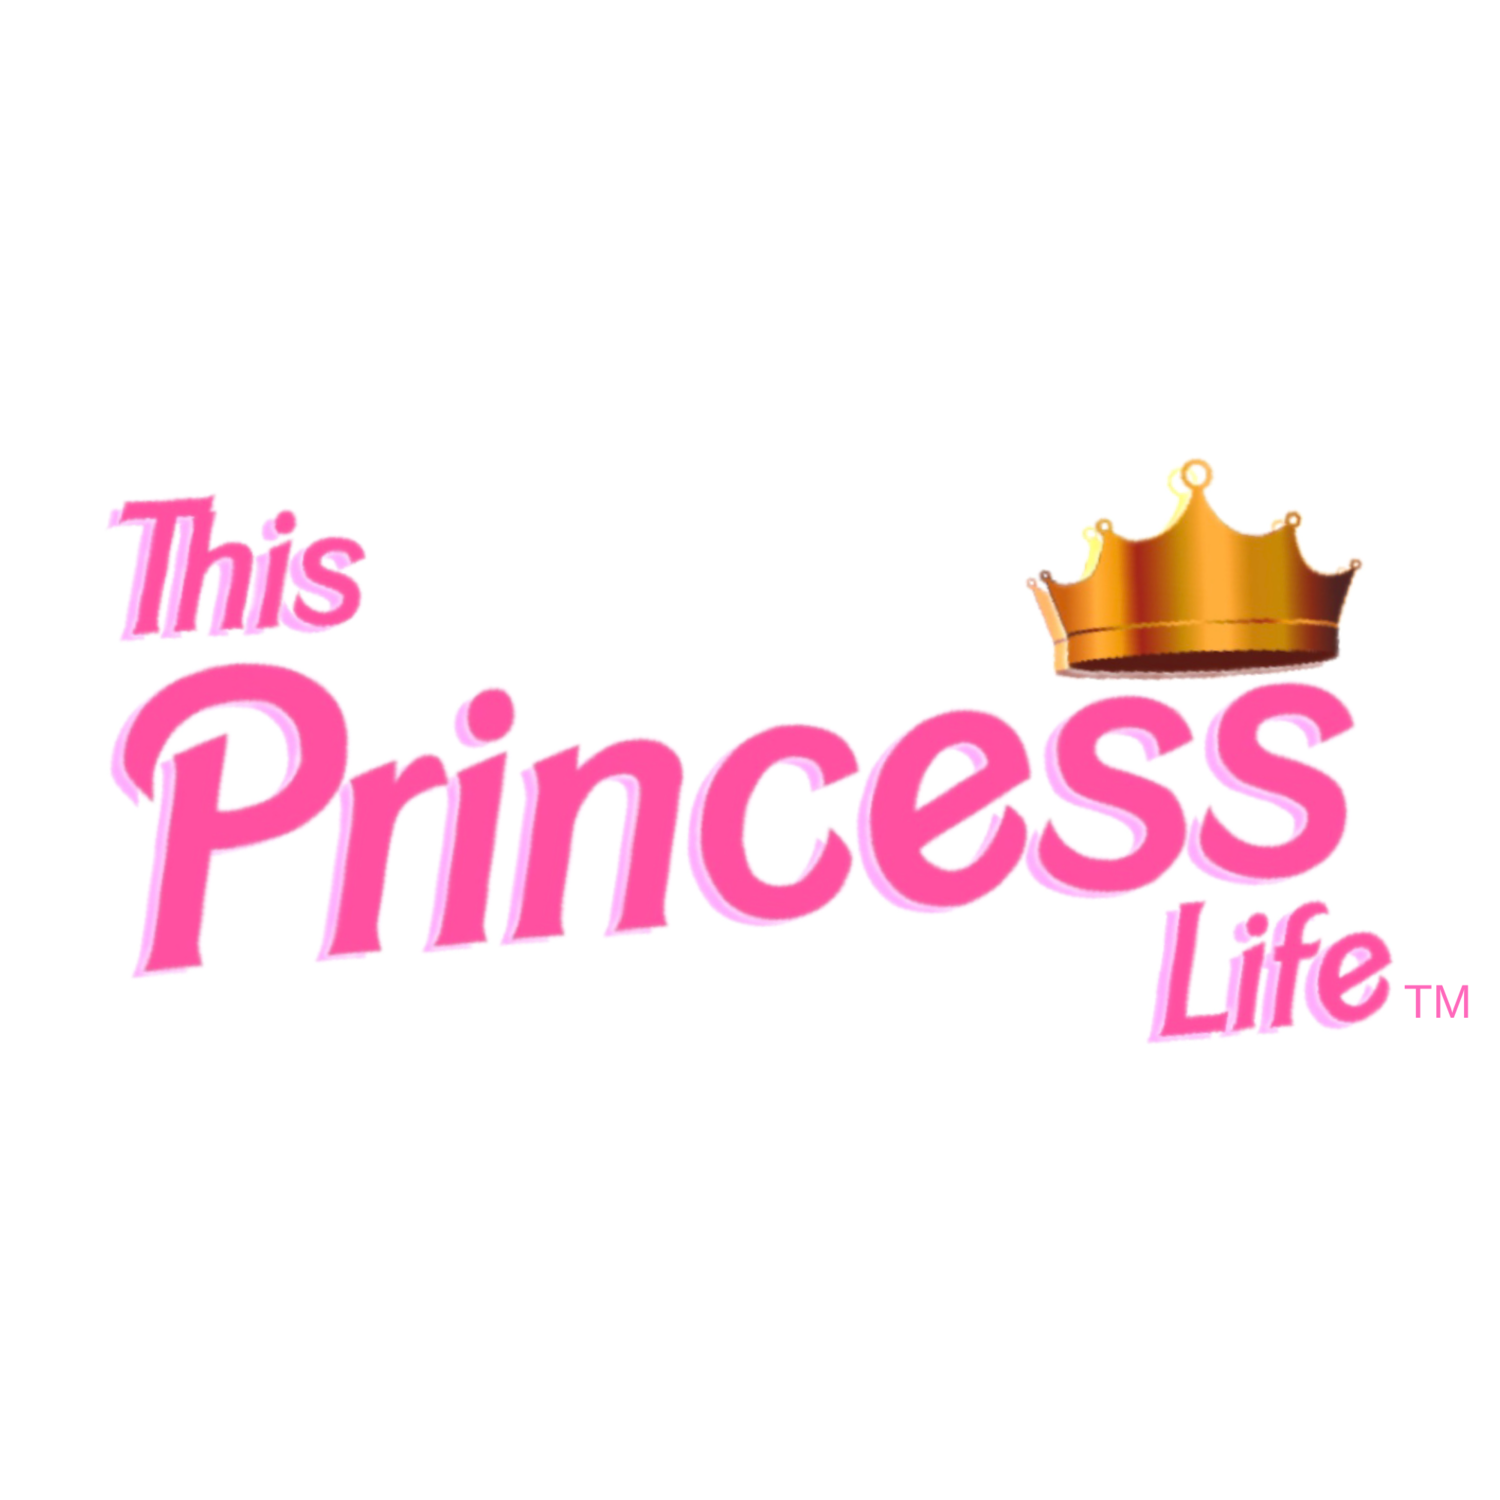 This Princess Life